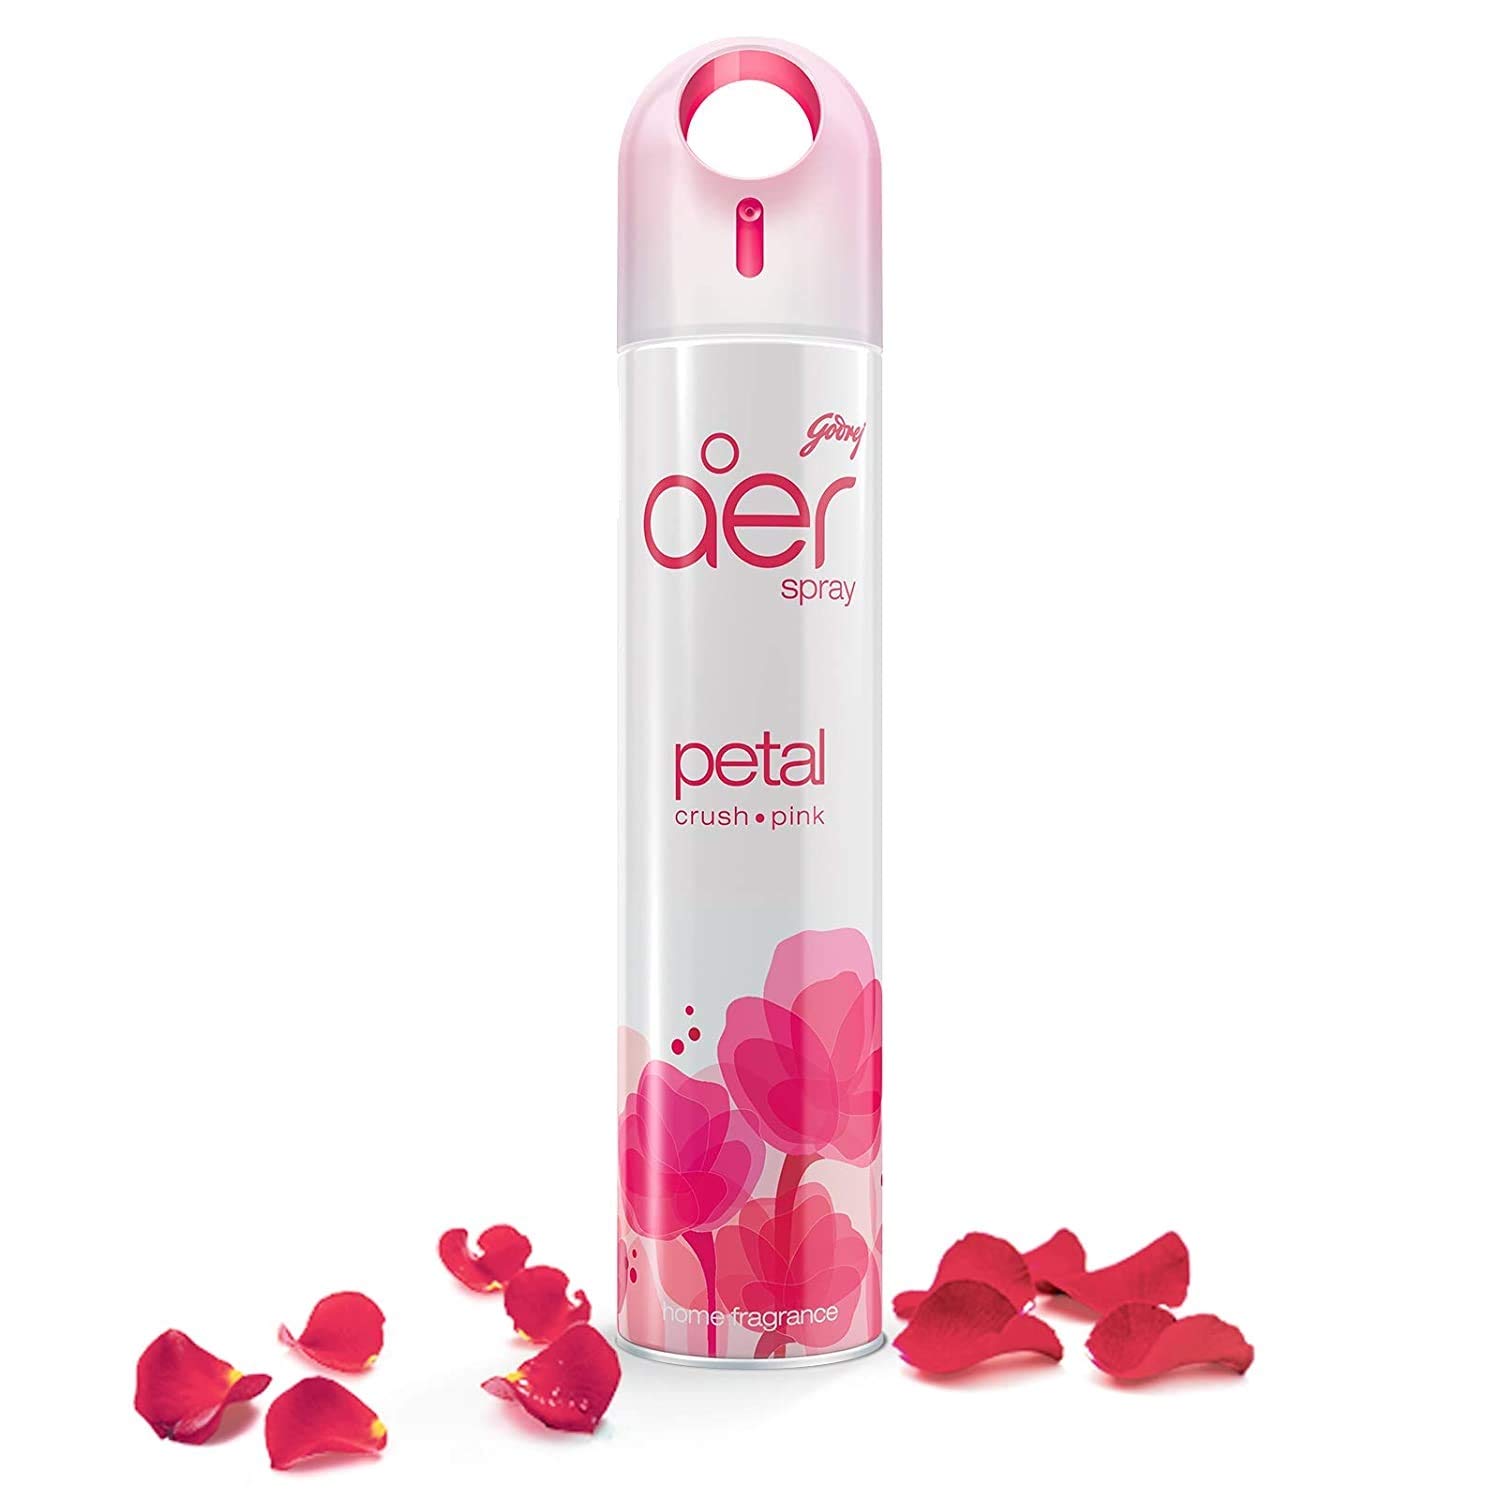 Godrej aer Spray Petal Crush Pink Home Fragrances